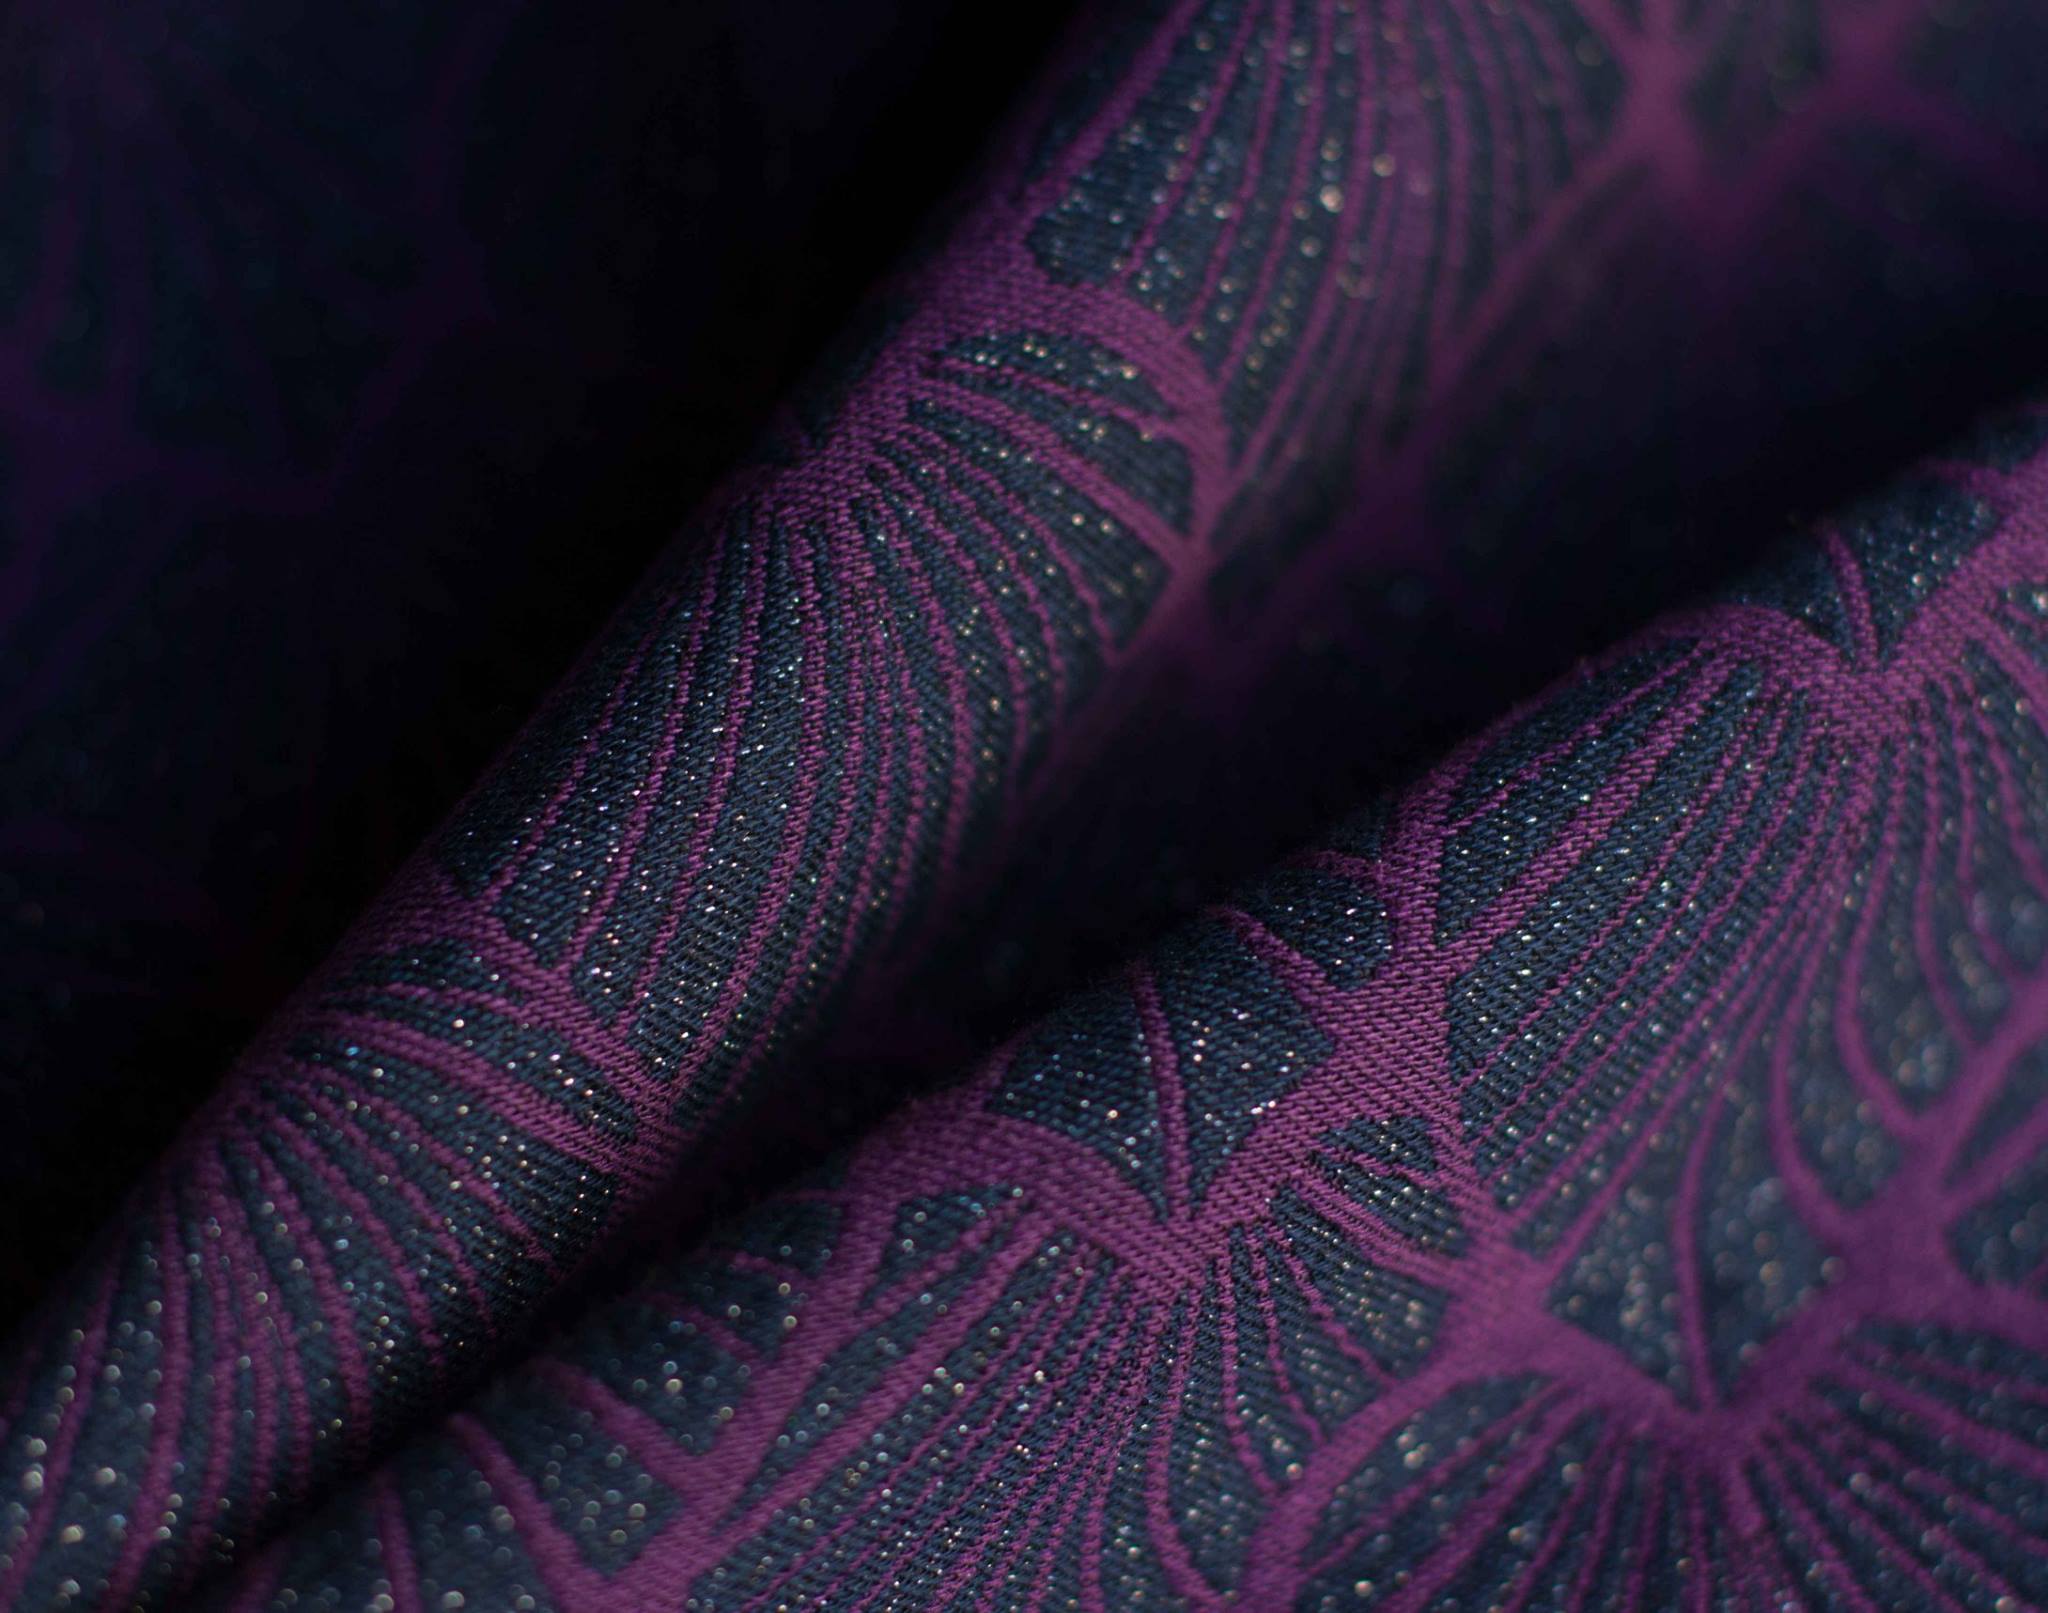 Linuschka Ipomée Ipomee Colombina (japanese silk, sparkles) Image